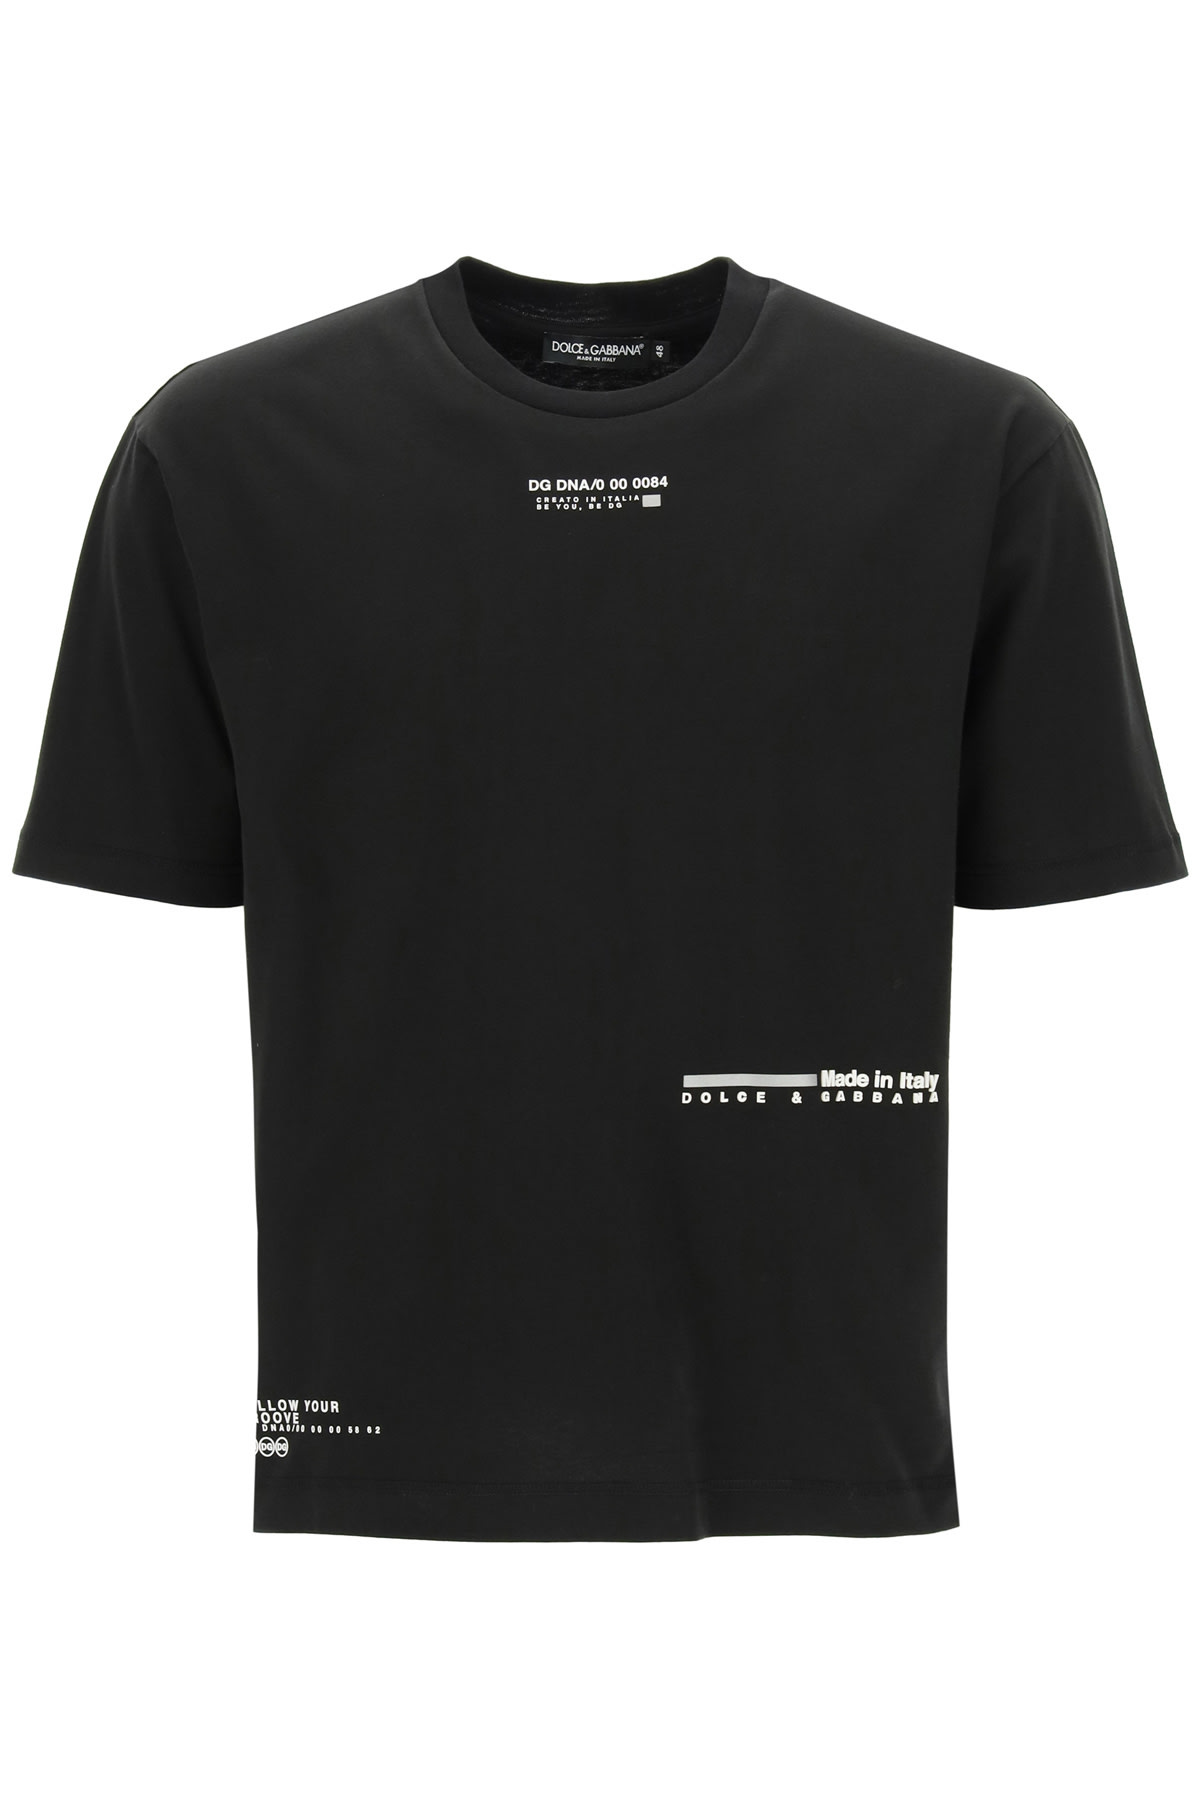 Dolce & Gabbana T-shirt With Rubberized Logo